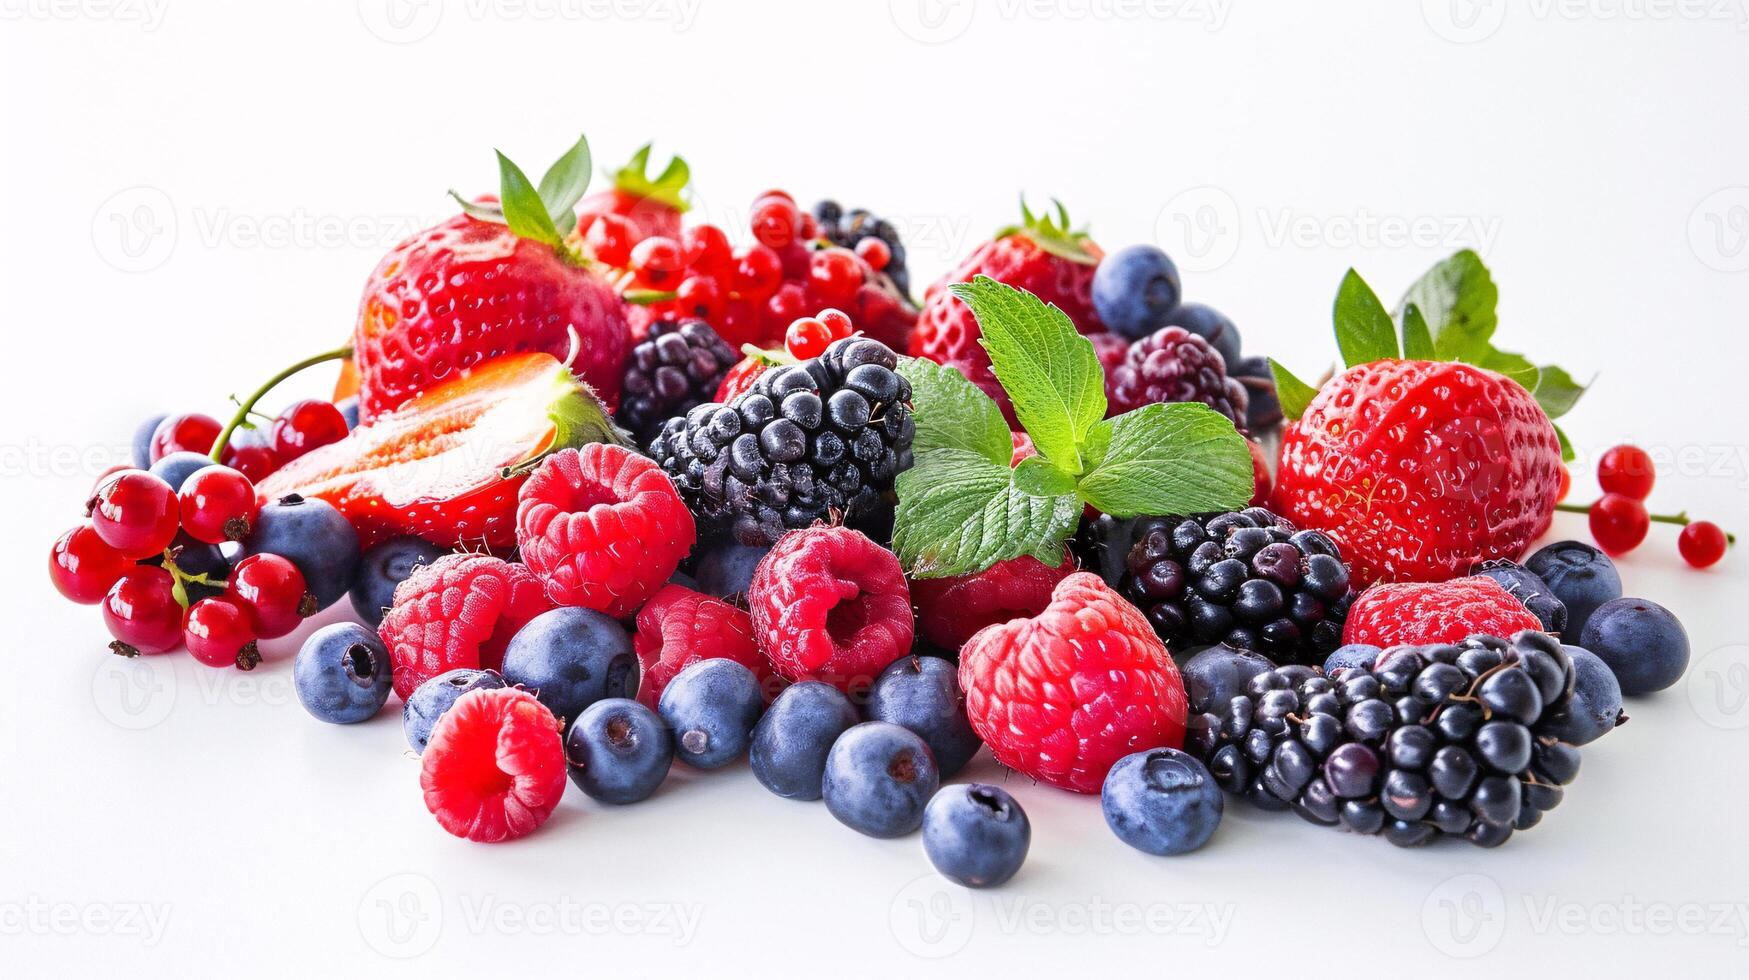 un abundante selección de fresco, vibrante frutas son dispersado ingeniosamente en el prístino blanco antecedentes foto